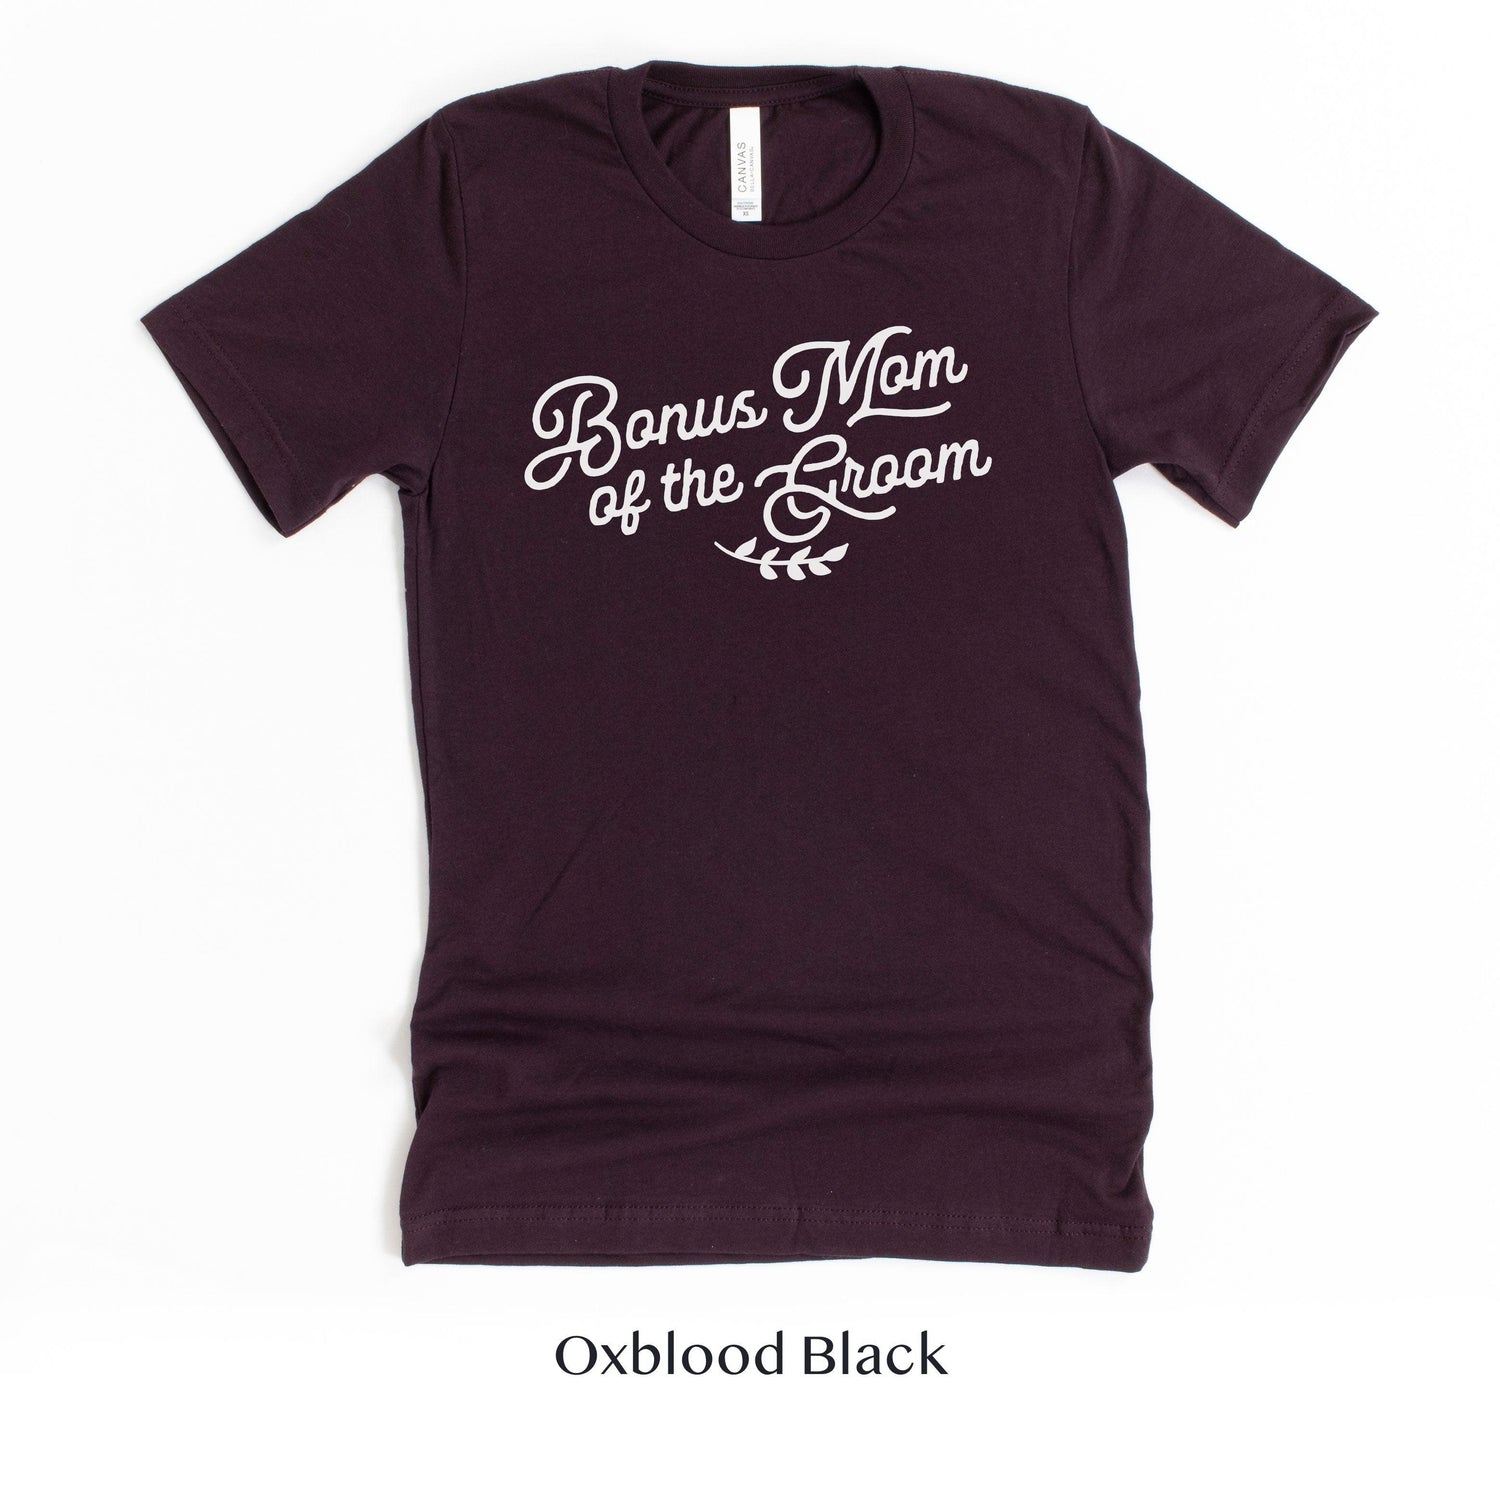 Bonus Mom of the Groom Short-sleeve Tee by Oaklynn Lane - Oxblood Maroon Shirt